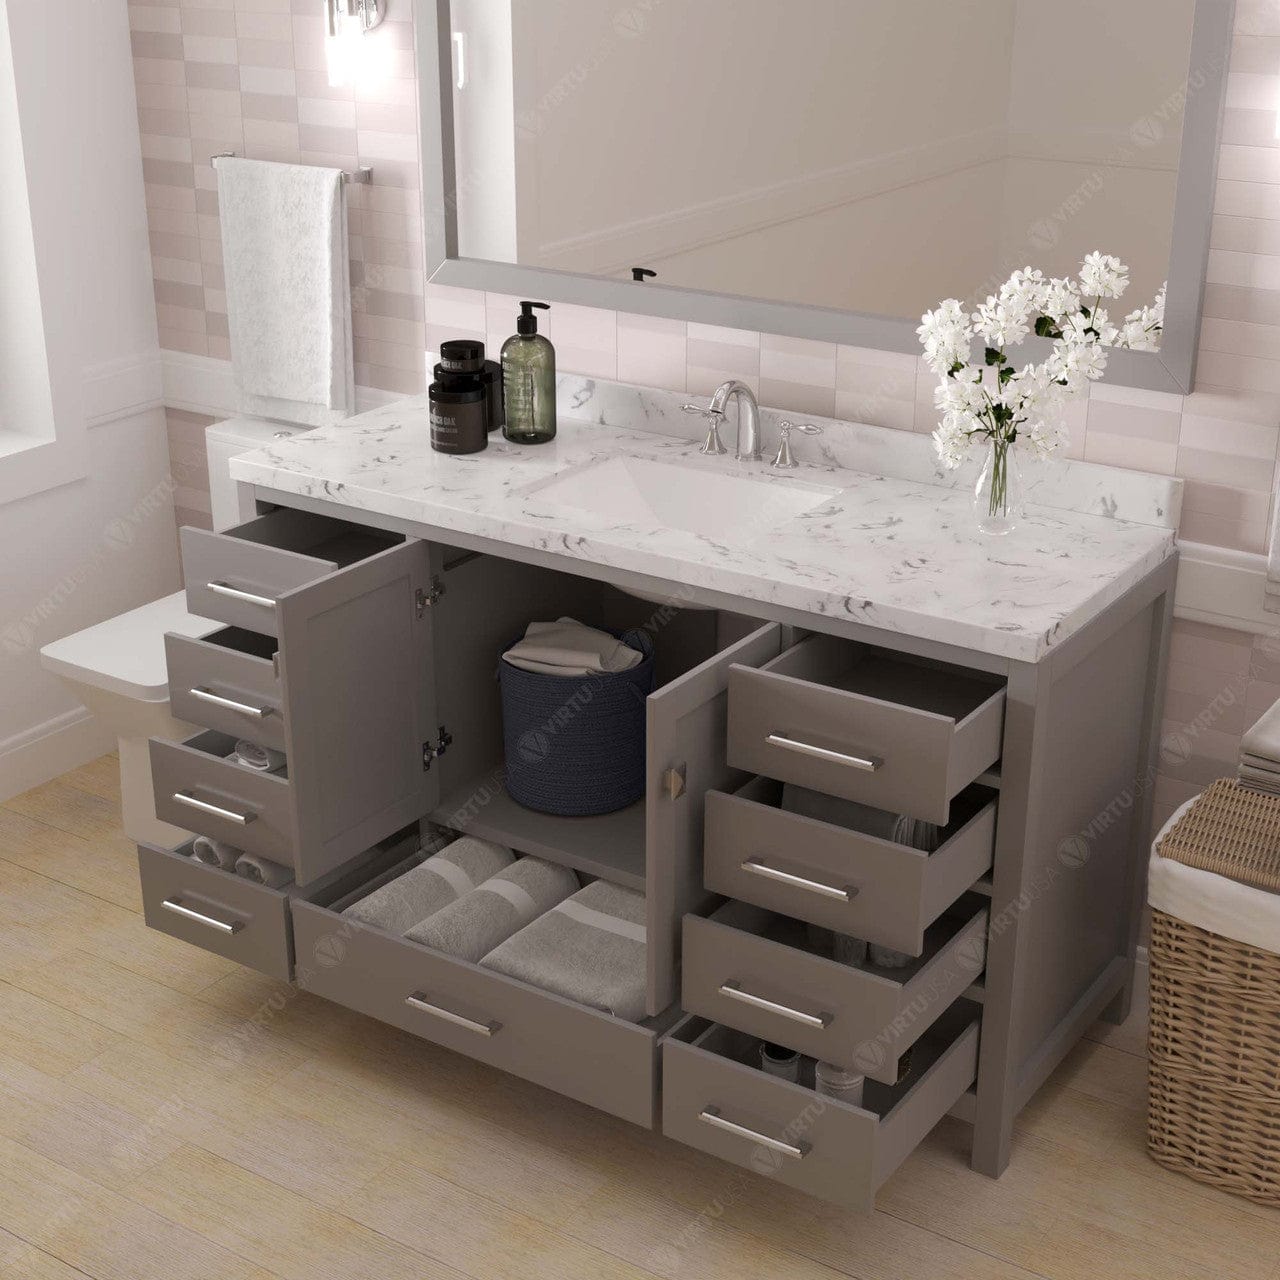 Caroline Avenue 60" Bathroom Vanity in Cashmere Gray with Quartz Countertop drawers open